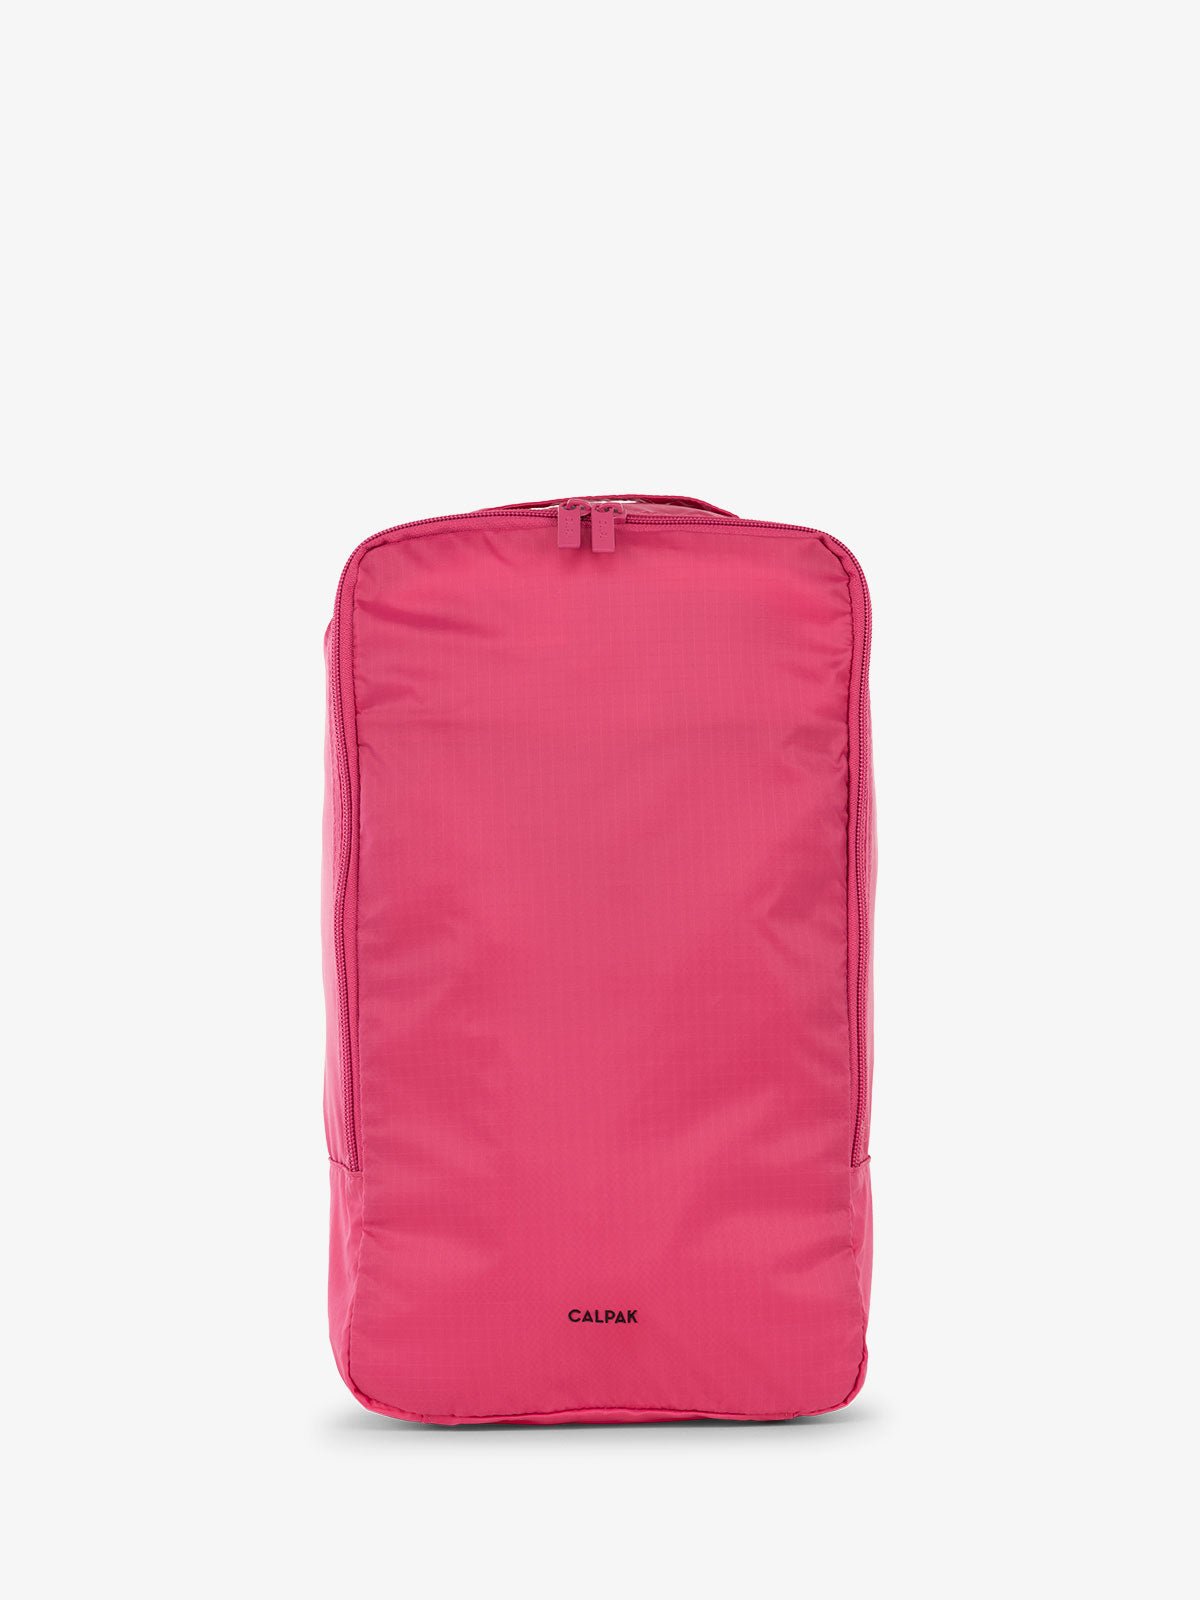 CALPAK Compakt shoe storage travel bag with handle in dragonfruit